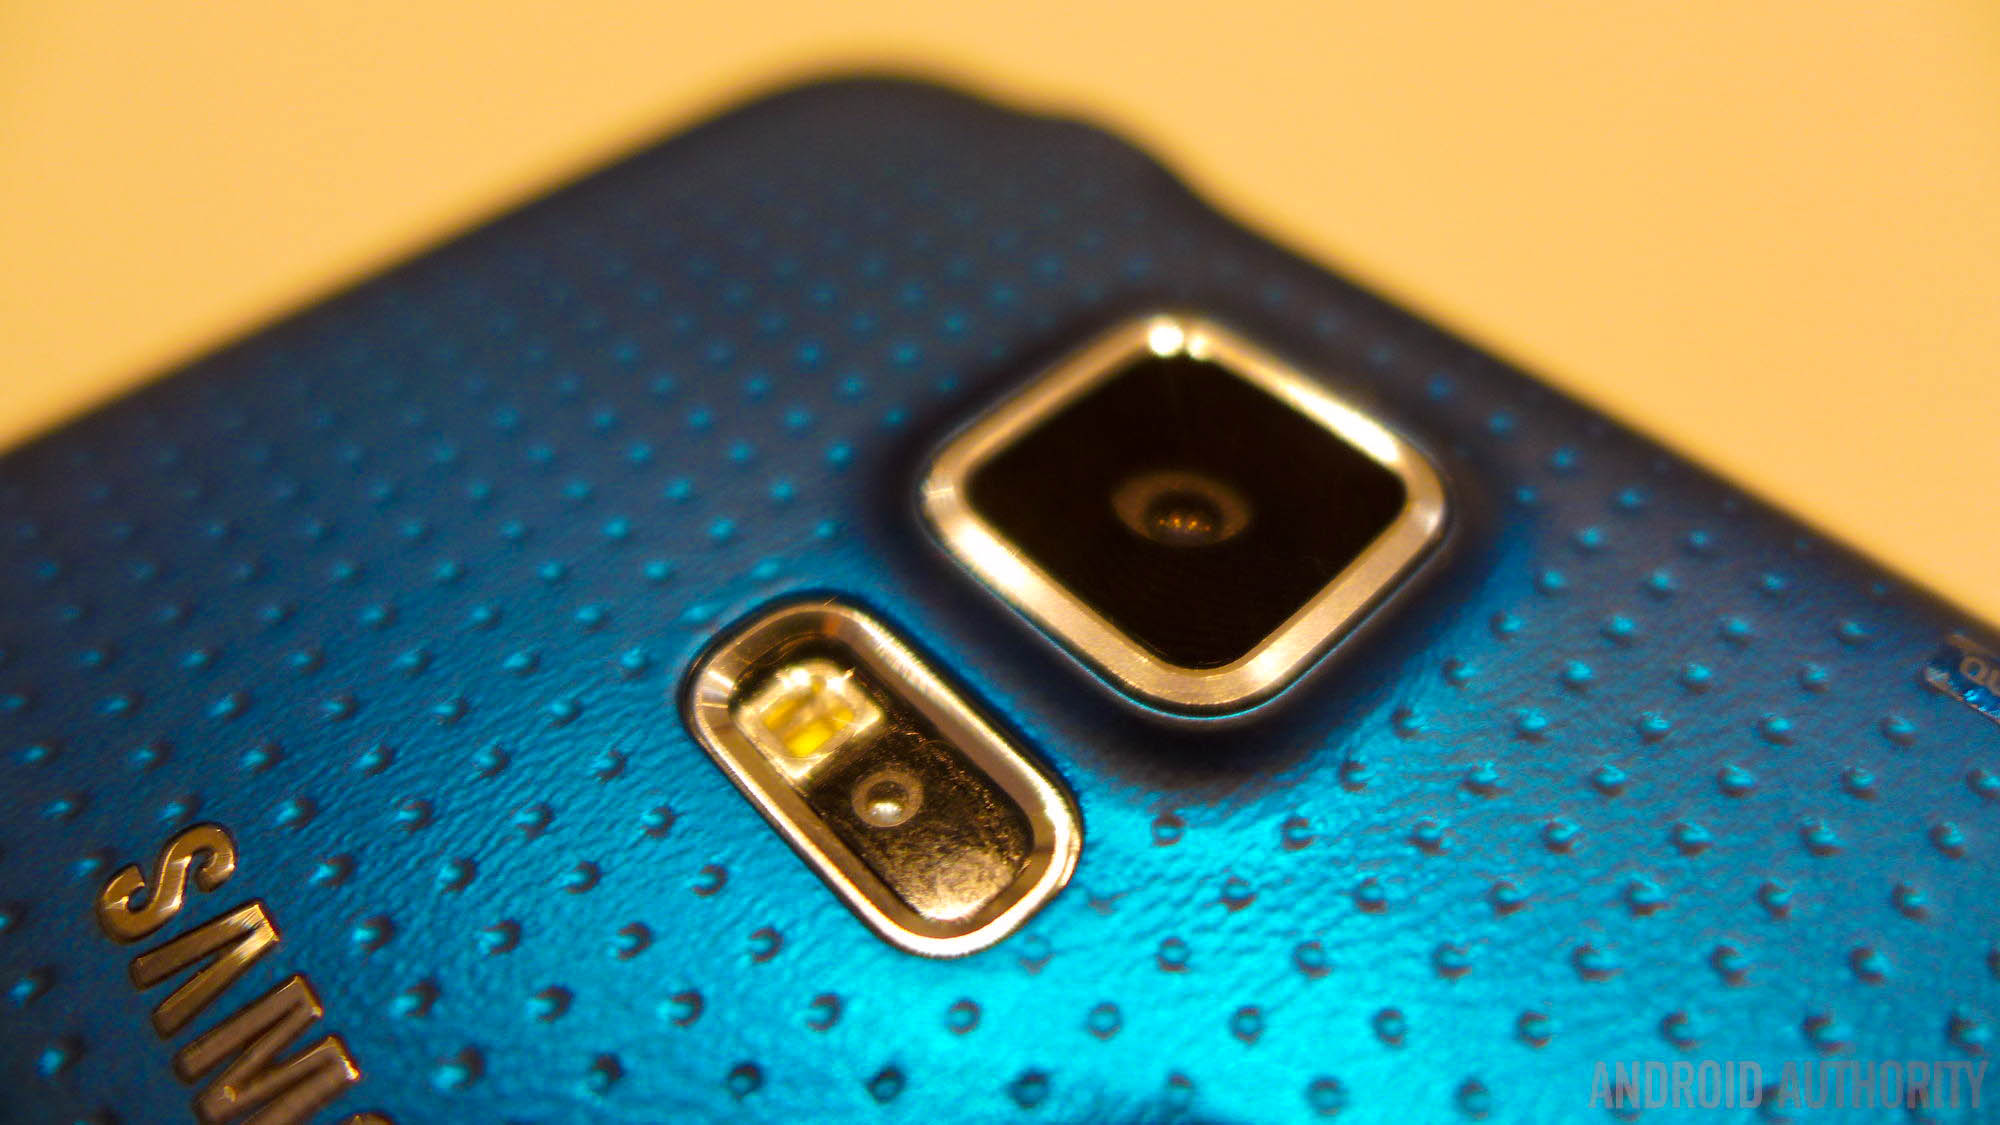 Samsung Galaxy S5 127 camera blue heart rate monitor